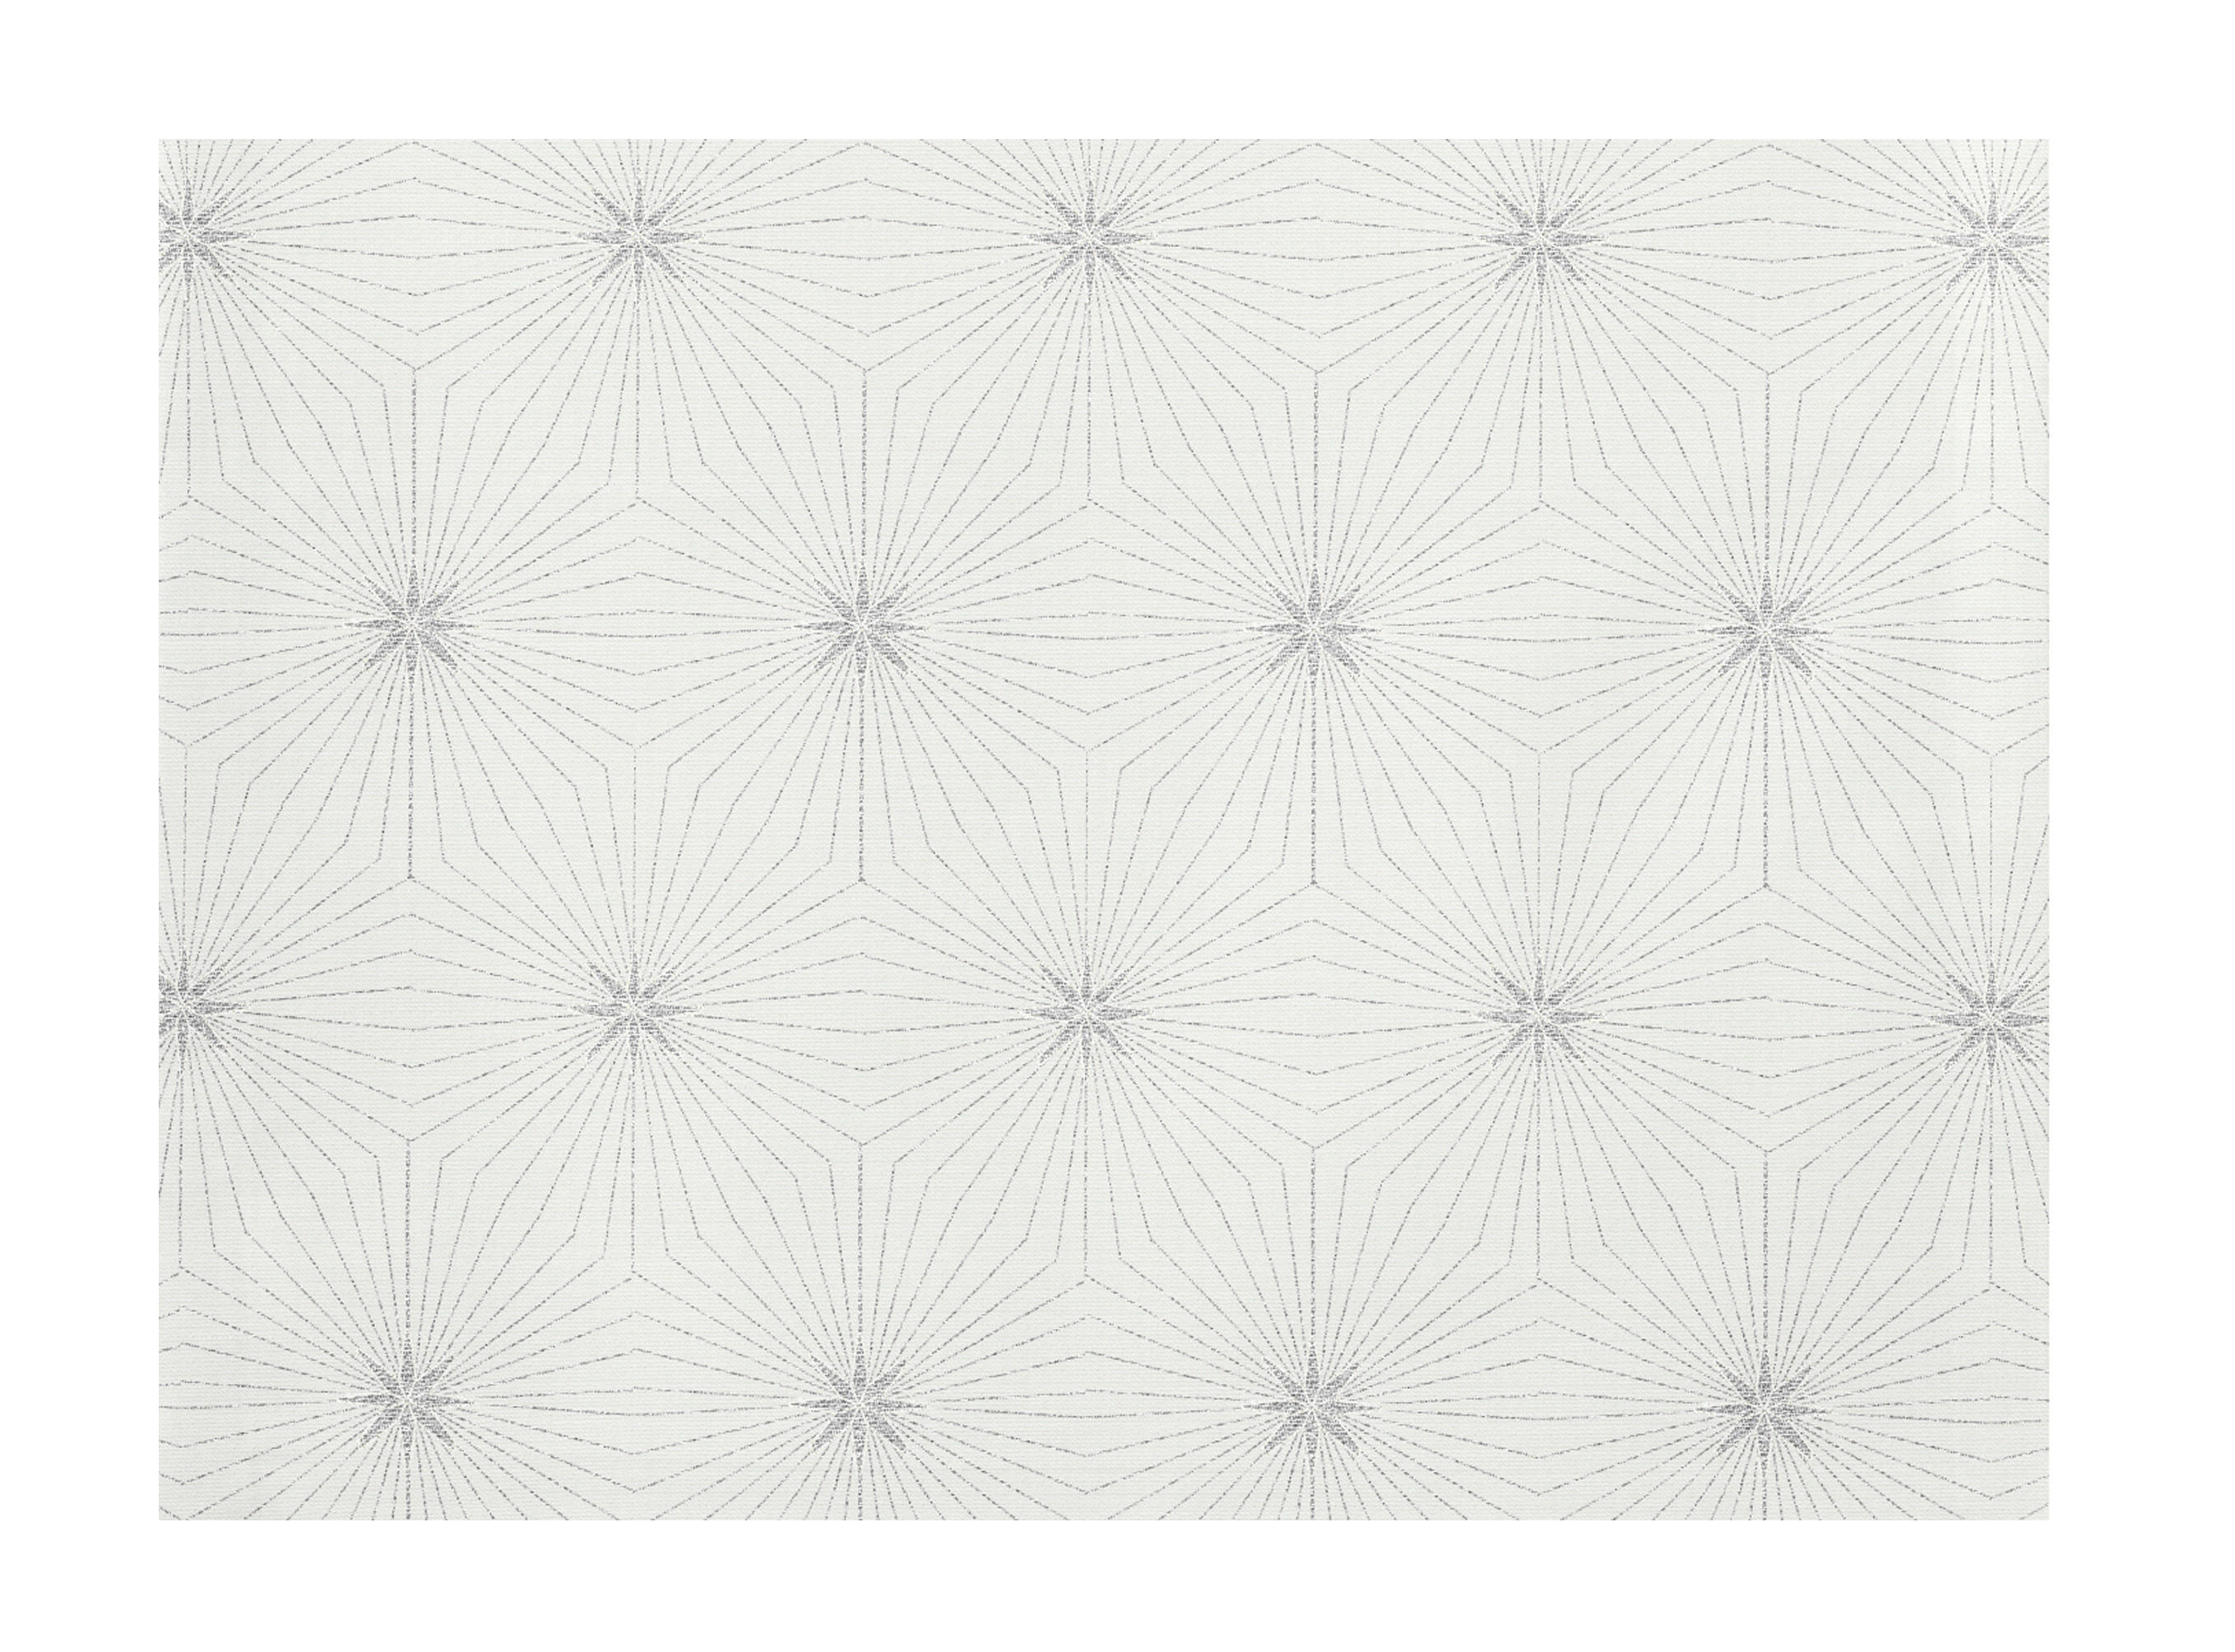 TISCHSET Textil Jacquard Grau 35/48 cm  - Grau, Basics, Textil (35/48cm) - X-Mas